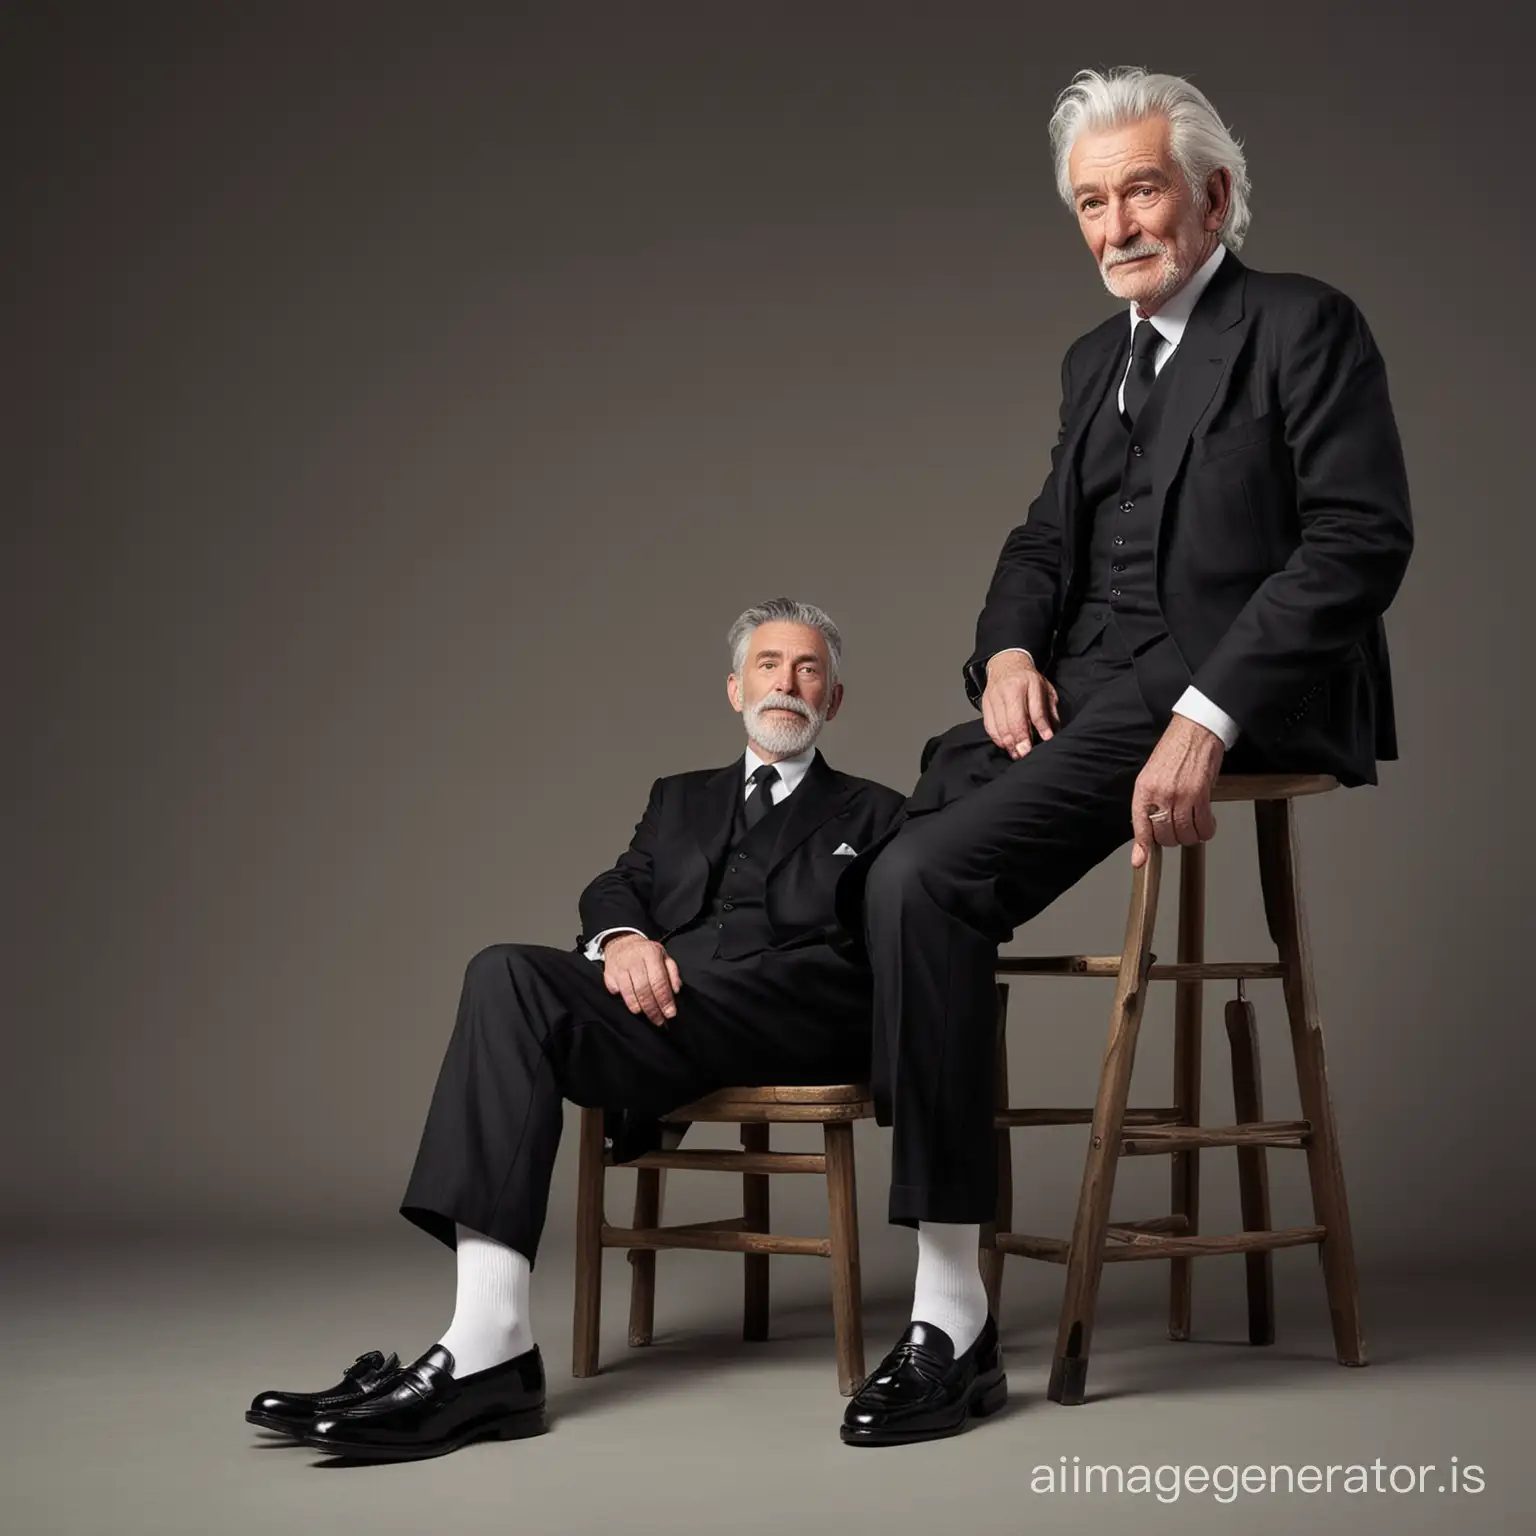 Elderly-Gentleman-in-Formal-Attire-Sitting-on-Chair-with-Dramatic-Lighting